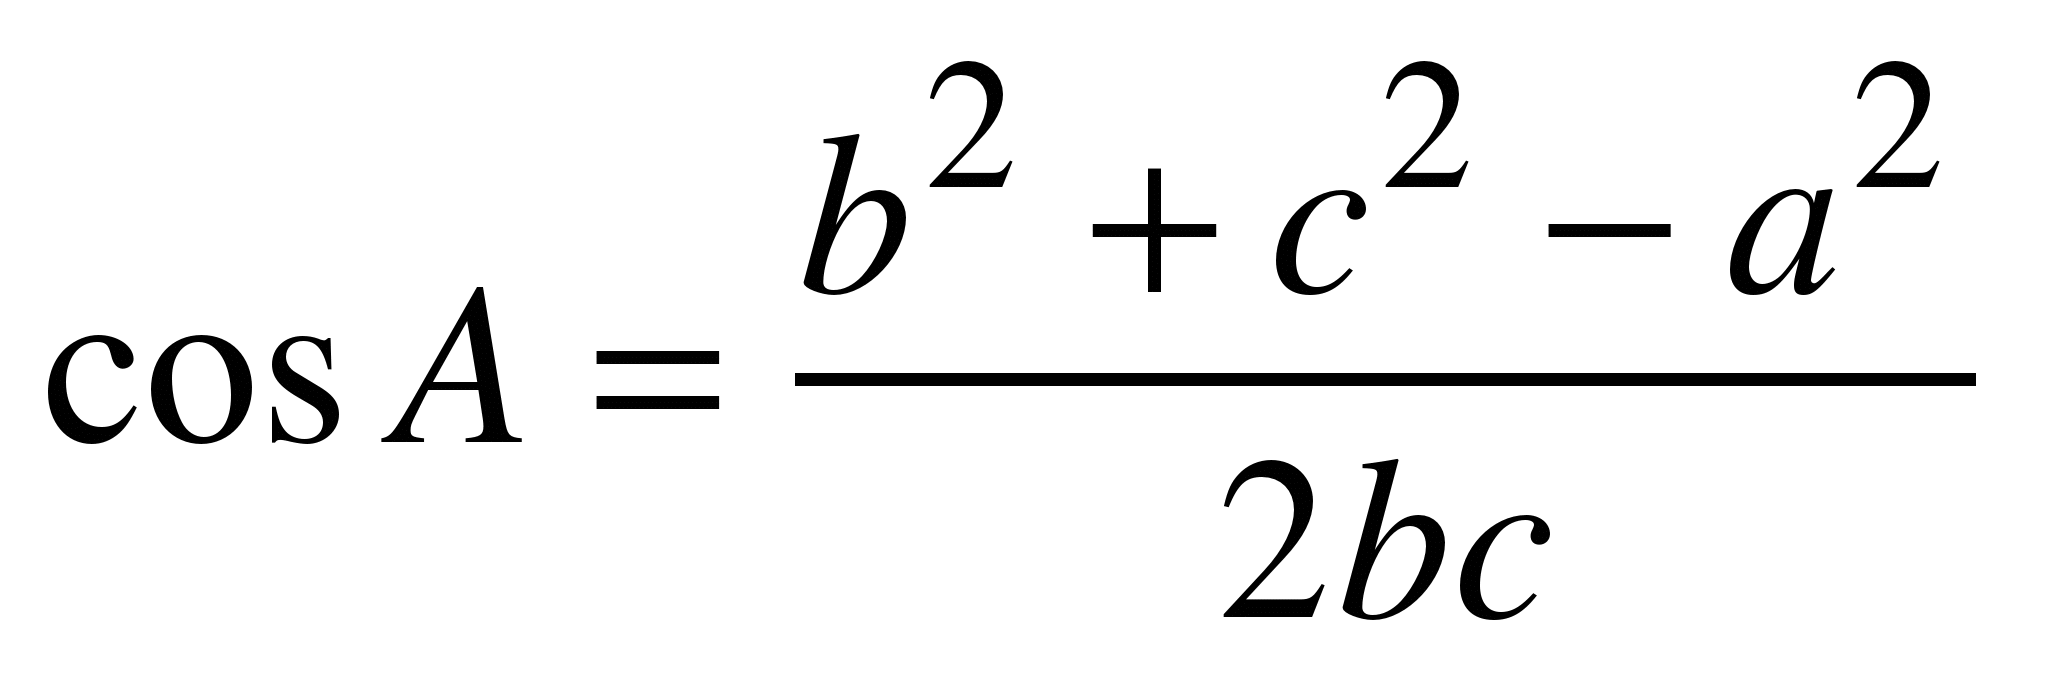 Cosine rule formula